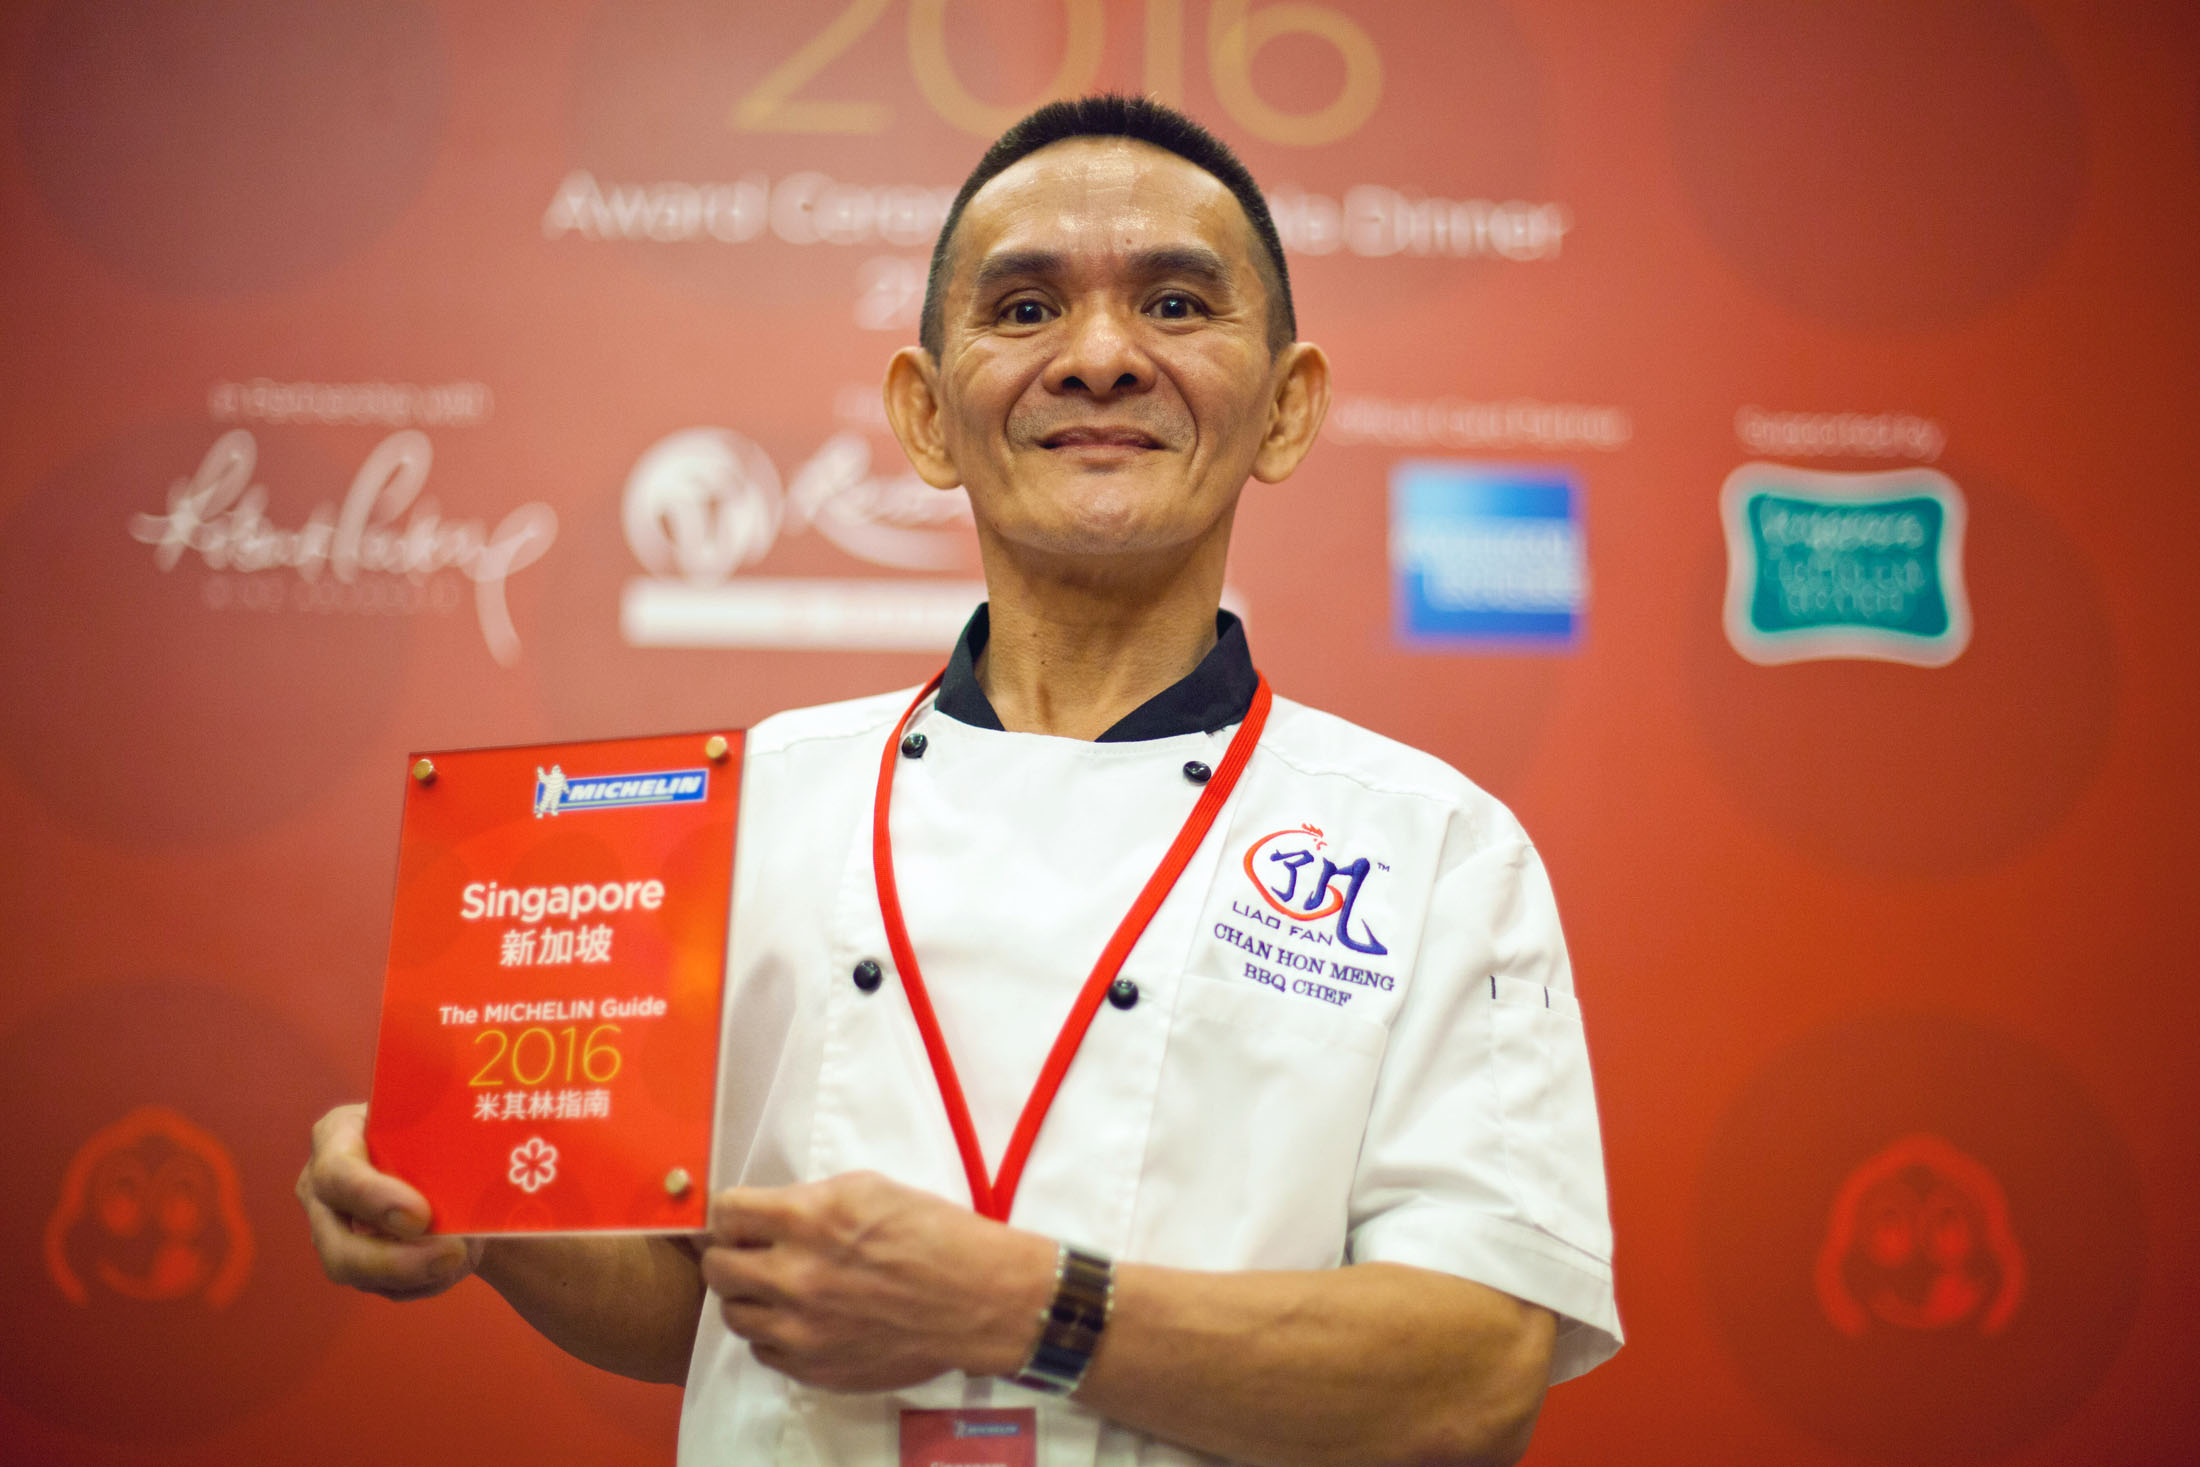 Mr Chan and his award / Image Credit: bloomberg